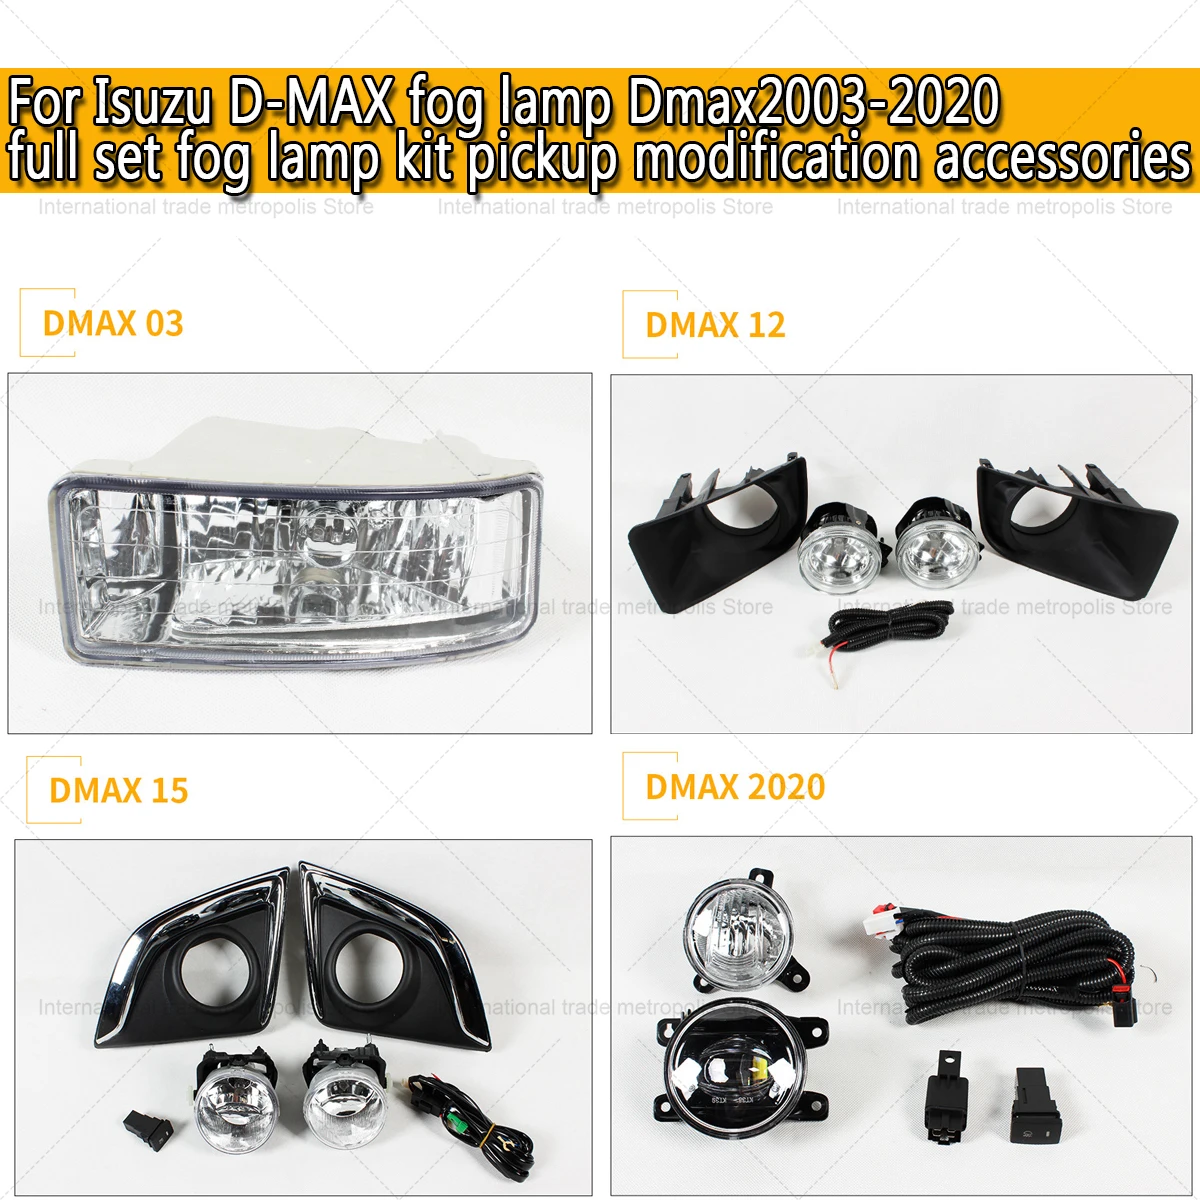 1 Set LED For Isuzu D-MAX Fog Lamp Dmax 2003-11 2012-14 2015-19 2020-up Full Set Fog Lamp Kit Pickup Modification Accessories